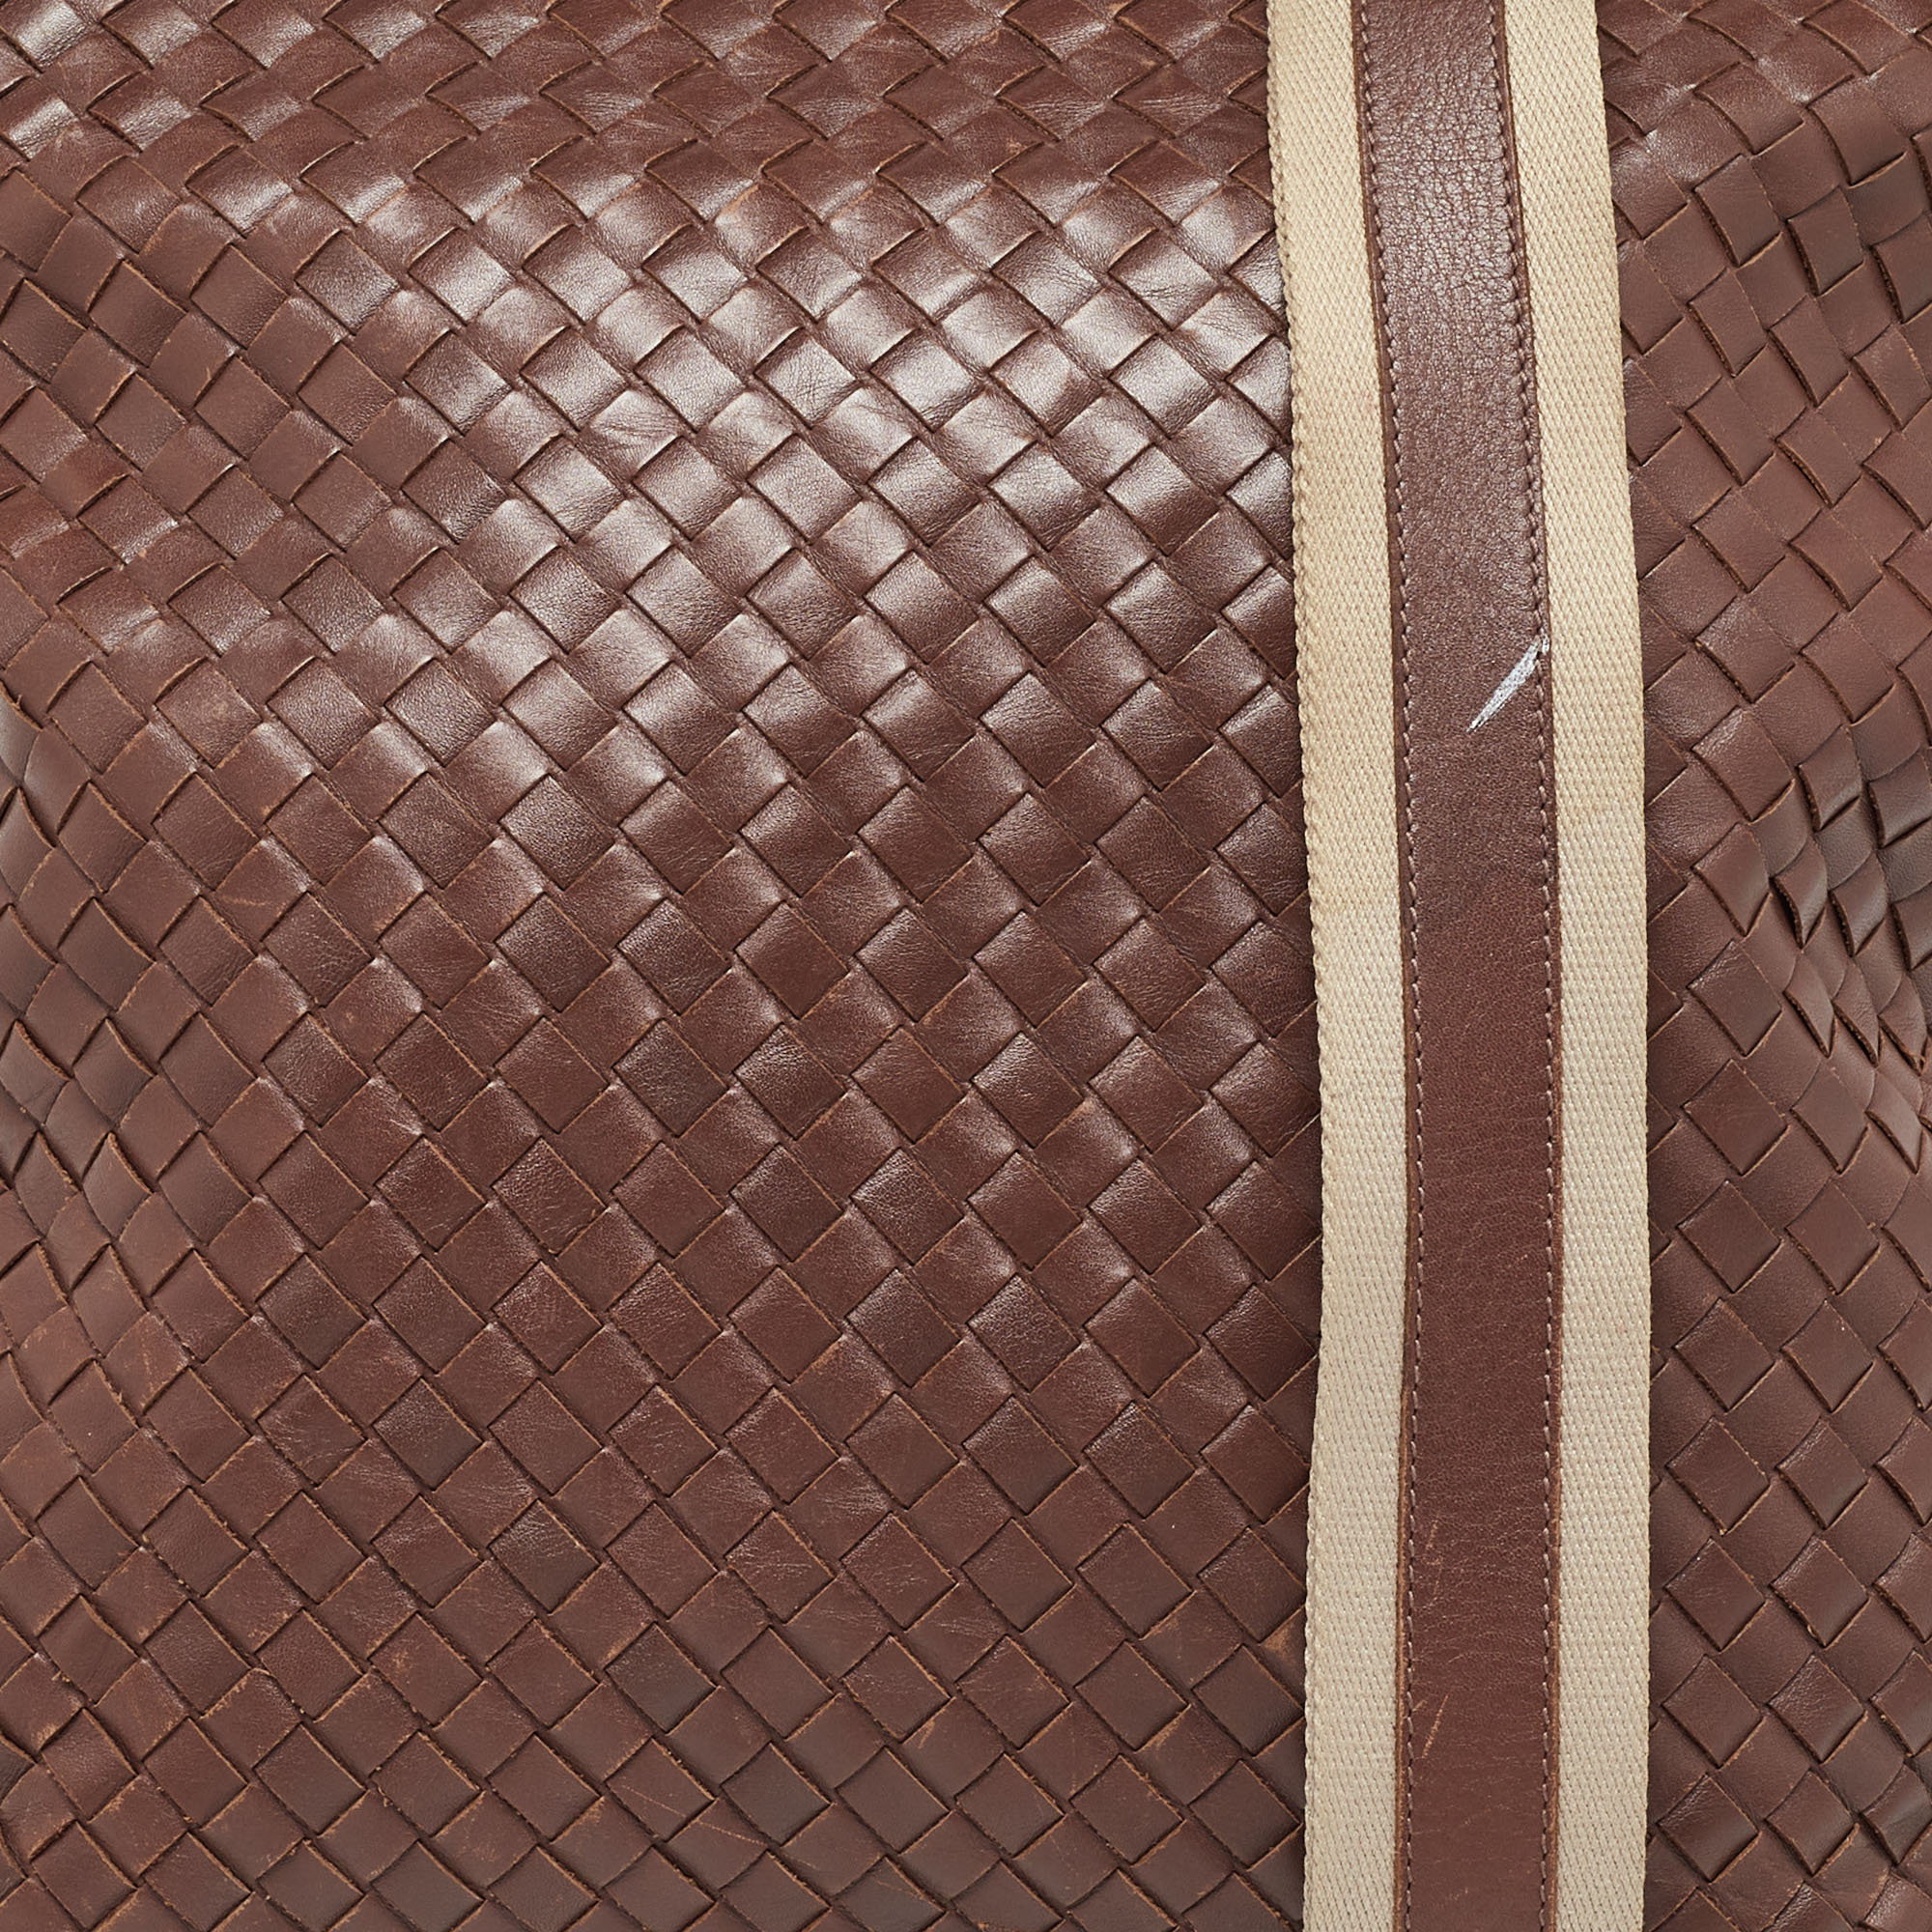 Bottega Veneta Brown Intrecciato Leather Messenger Bag